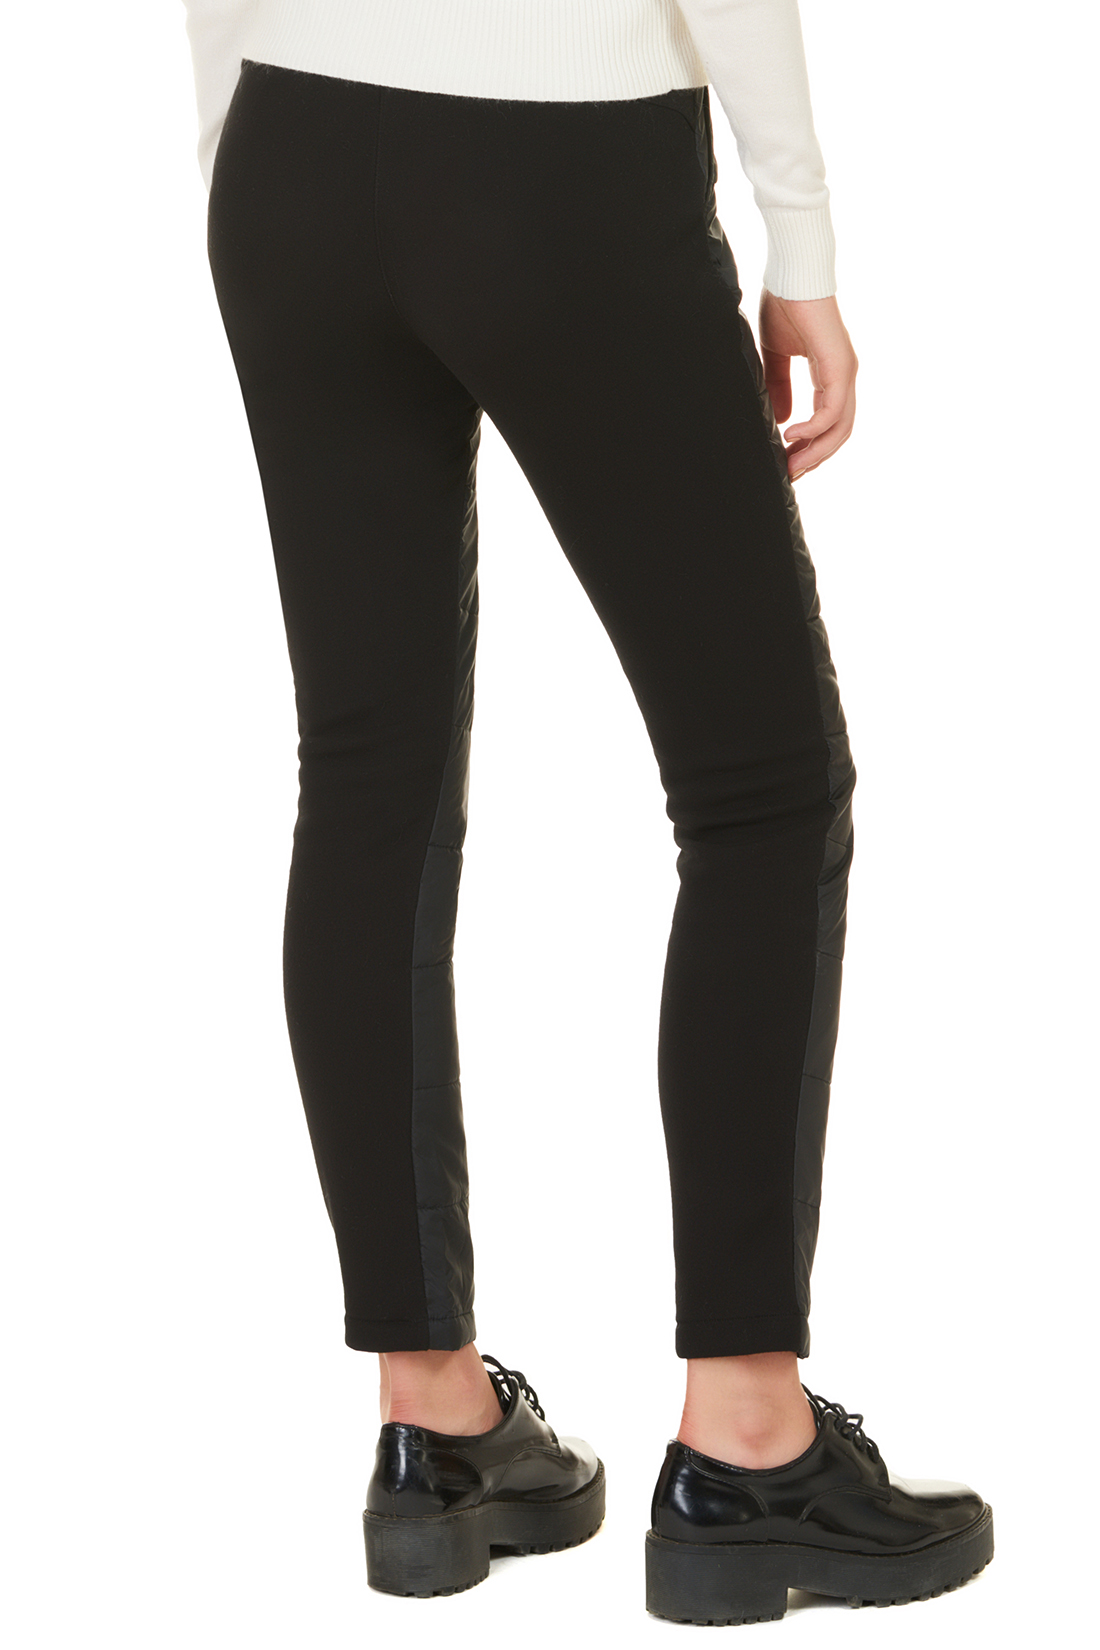 Утеплённые брюки без застёжки (арт. baon B297504), размер S, цвет черный Утеплённые брюки без застёжки (арт. baon B297504) - фото 2